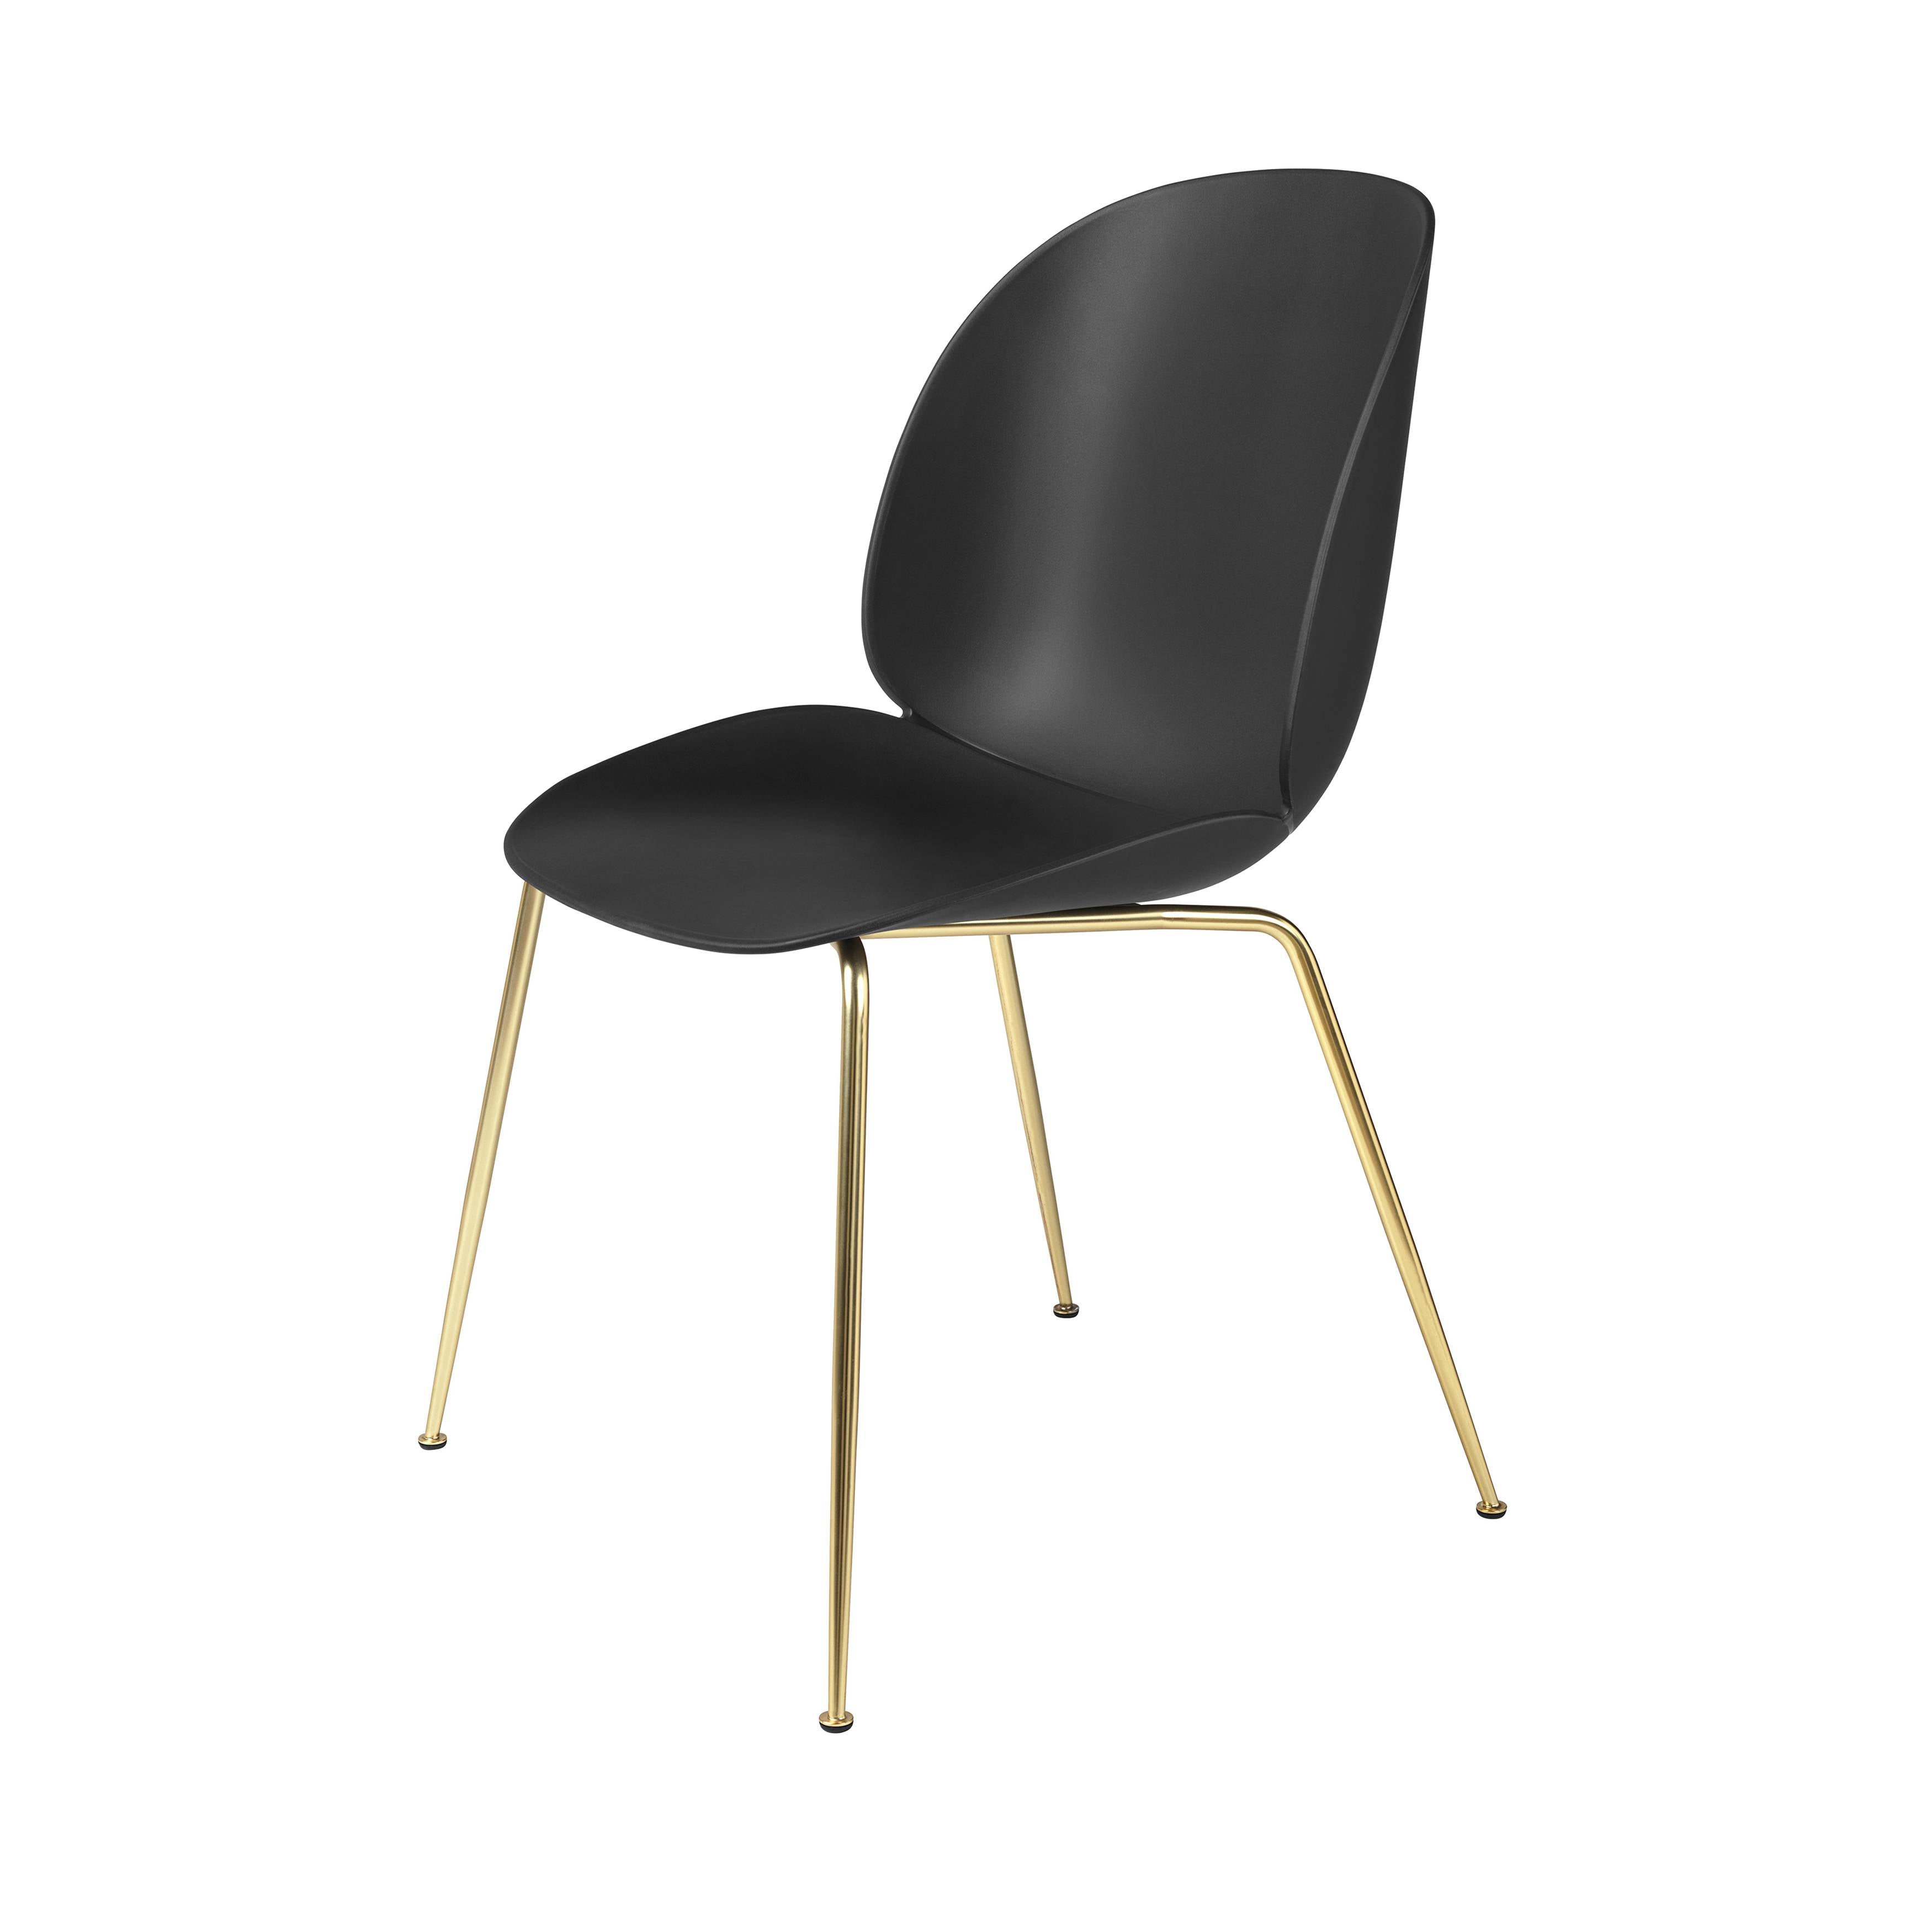 Beetle Dining Chair: Conic Base + Black + Brass Semi Matt + Felt Glides